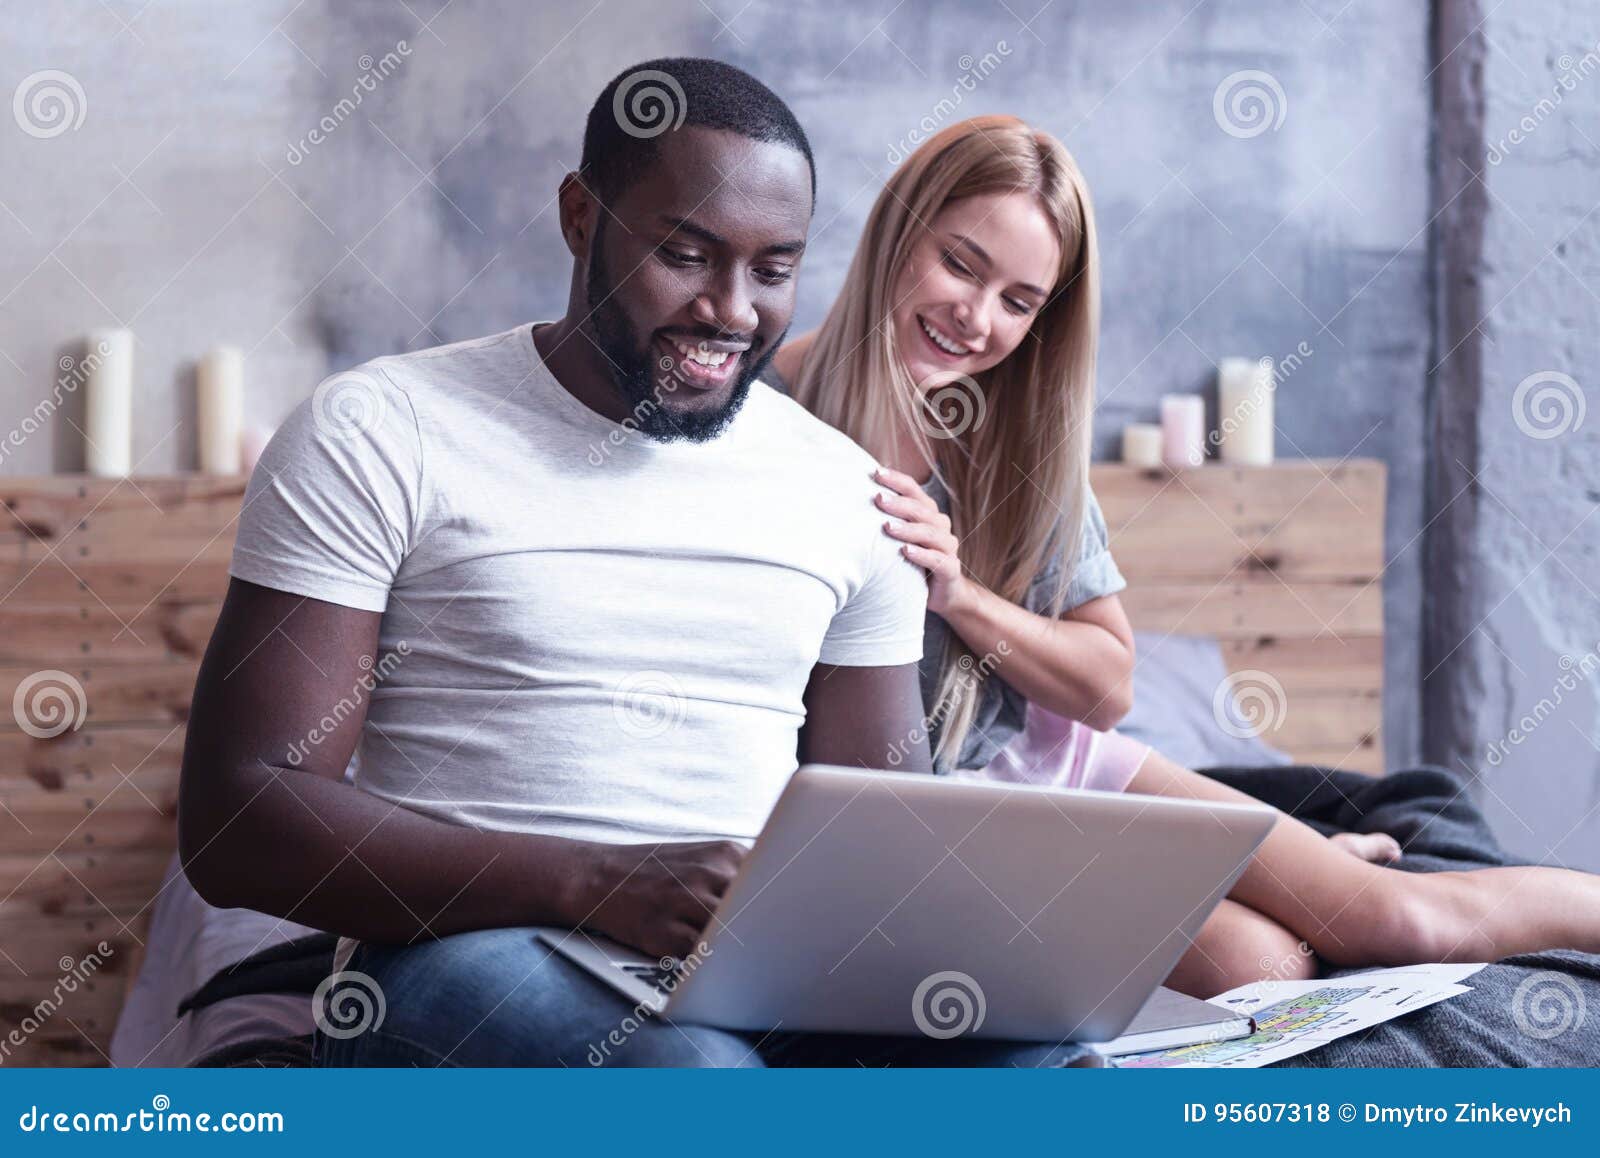 https://thumbs.dreamstime.com/z/involved-international-couple-enjoying-online-shopping-home-testing-peaceful-smiling-sitting-bedroom-using-gadget-95607318.jpg